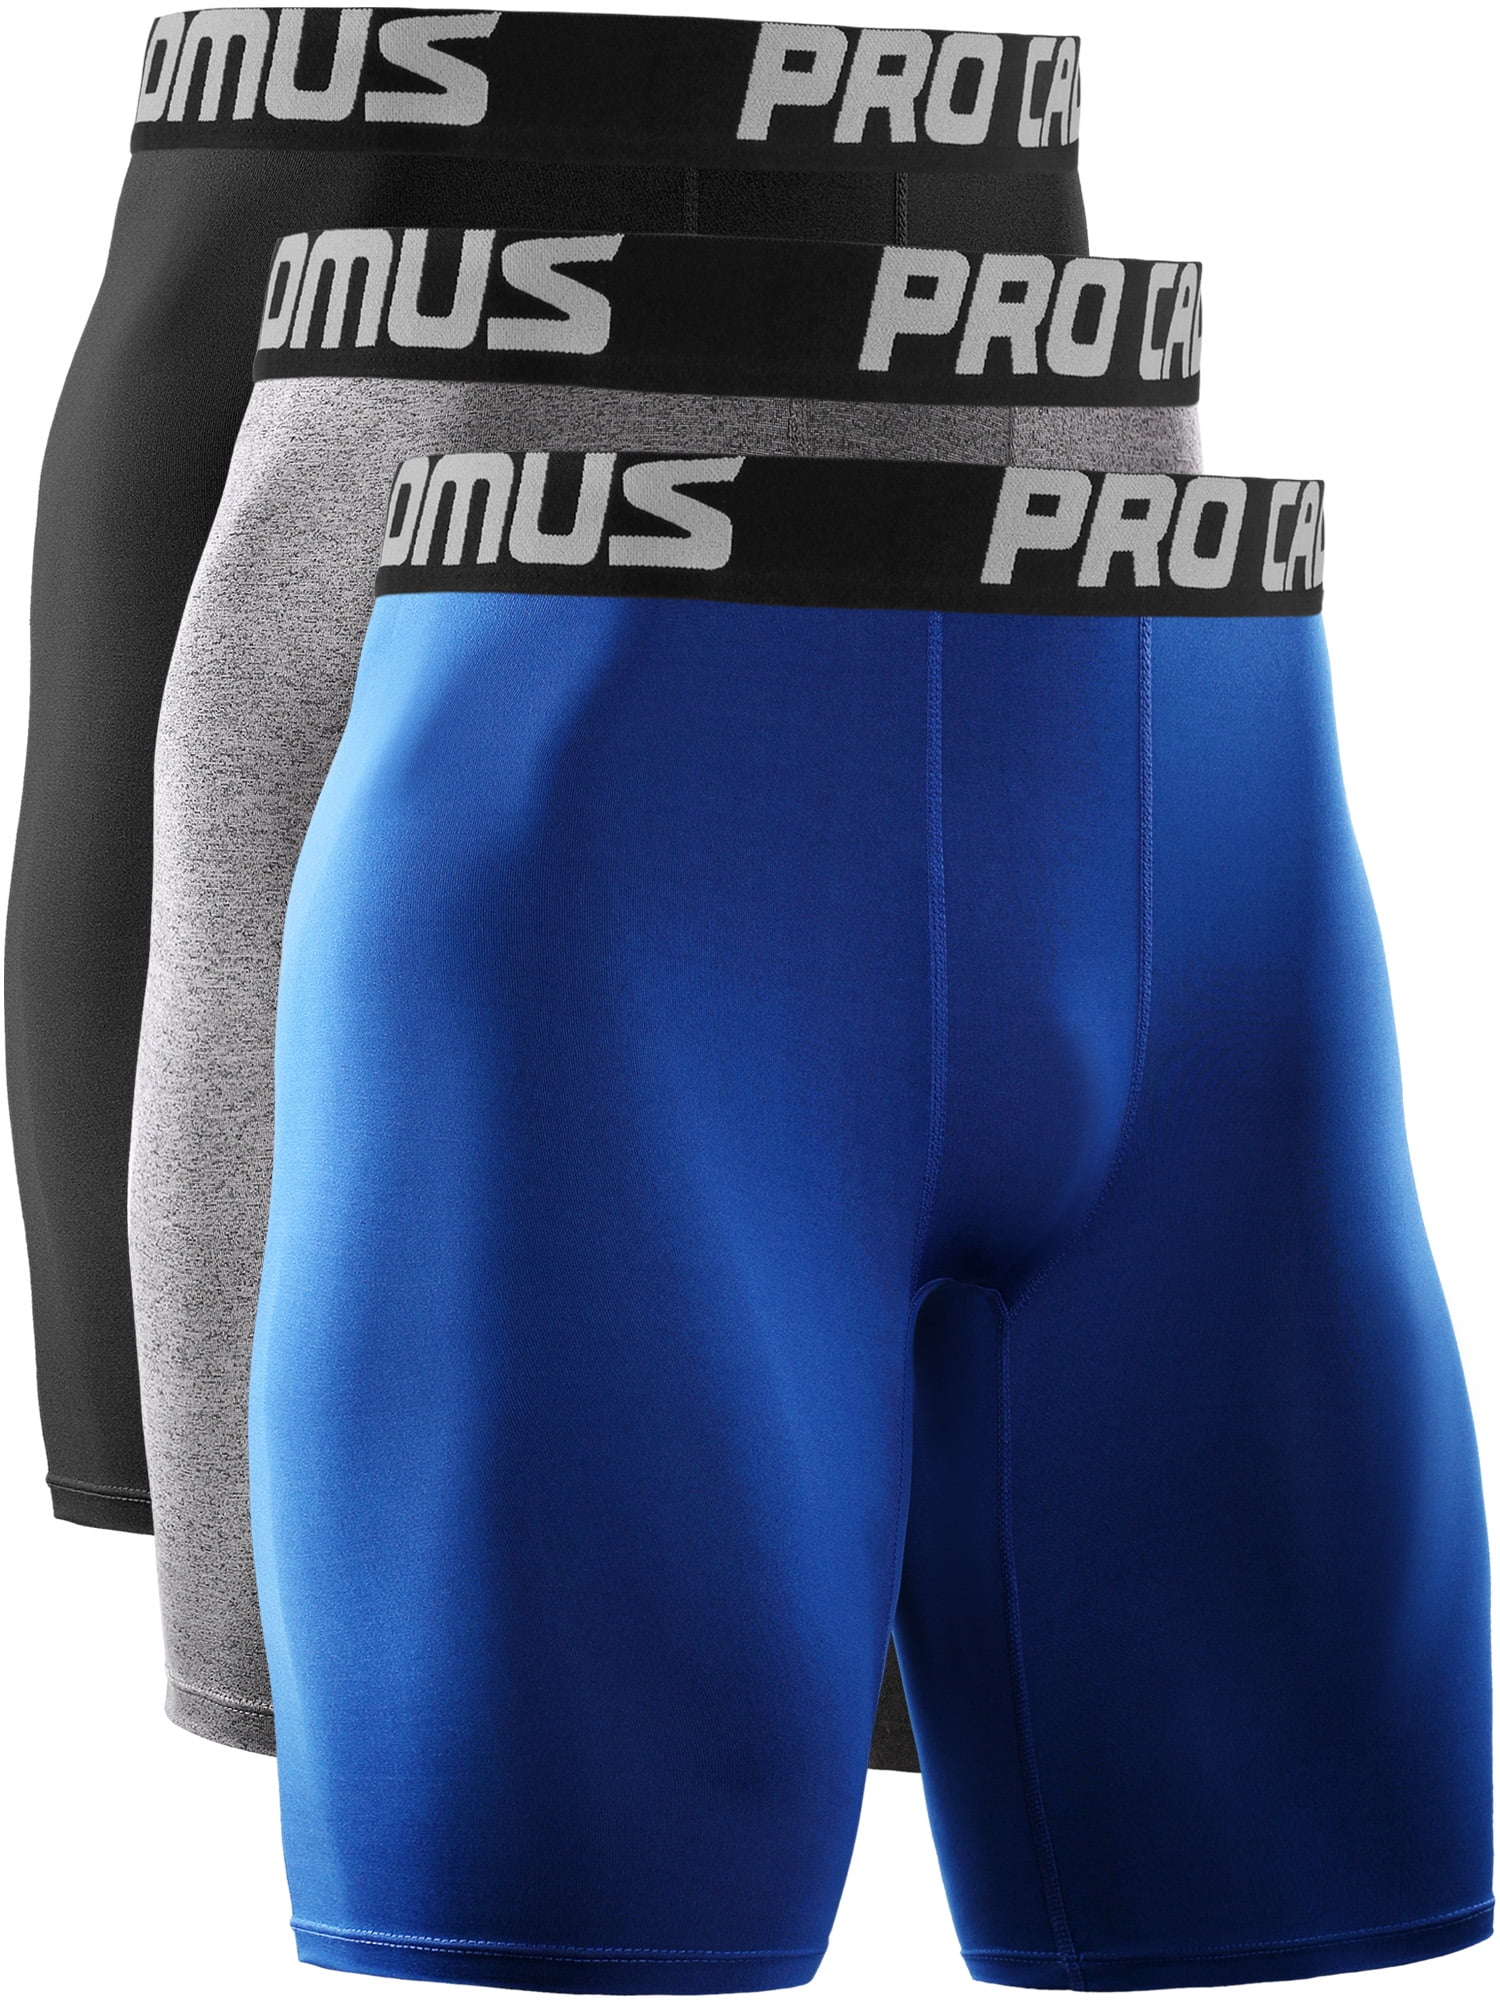 Cadmus Men's Running Compression Shorts Athletic Workout Performance  Underwear 3 Pack,Black, Grey, Navy Blue,X-Large